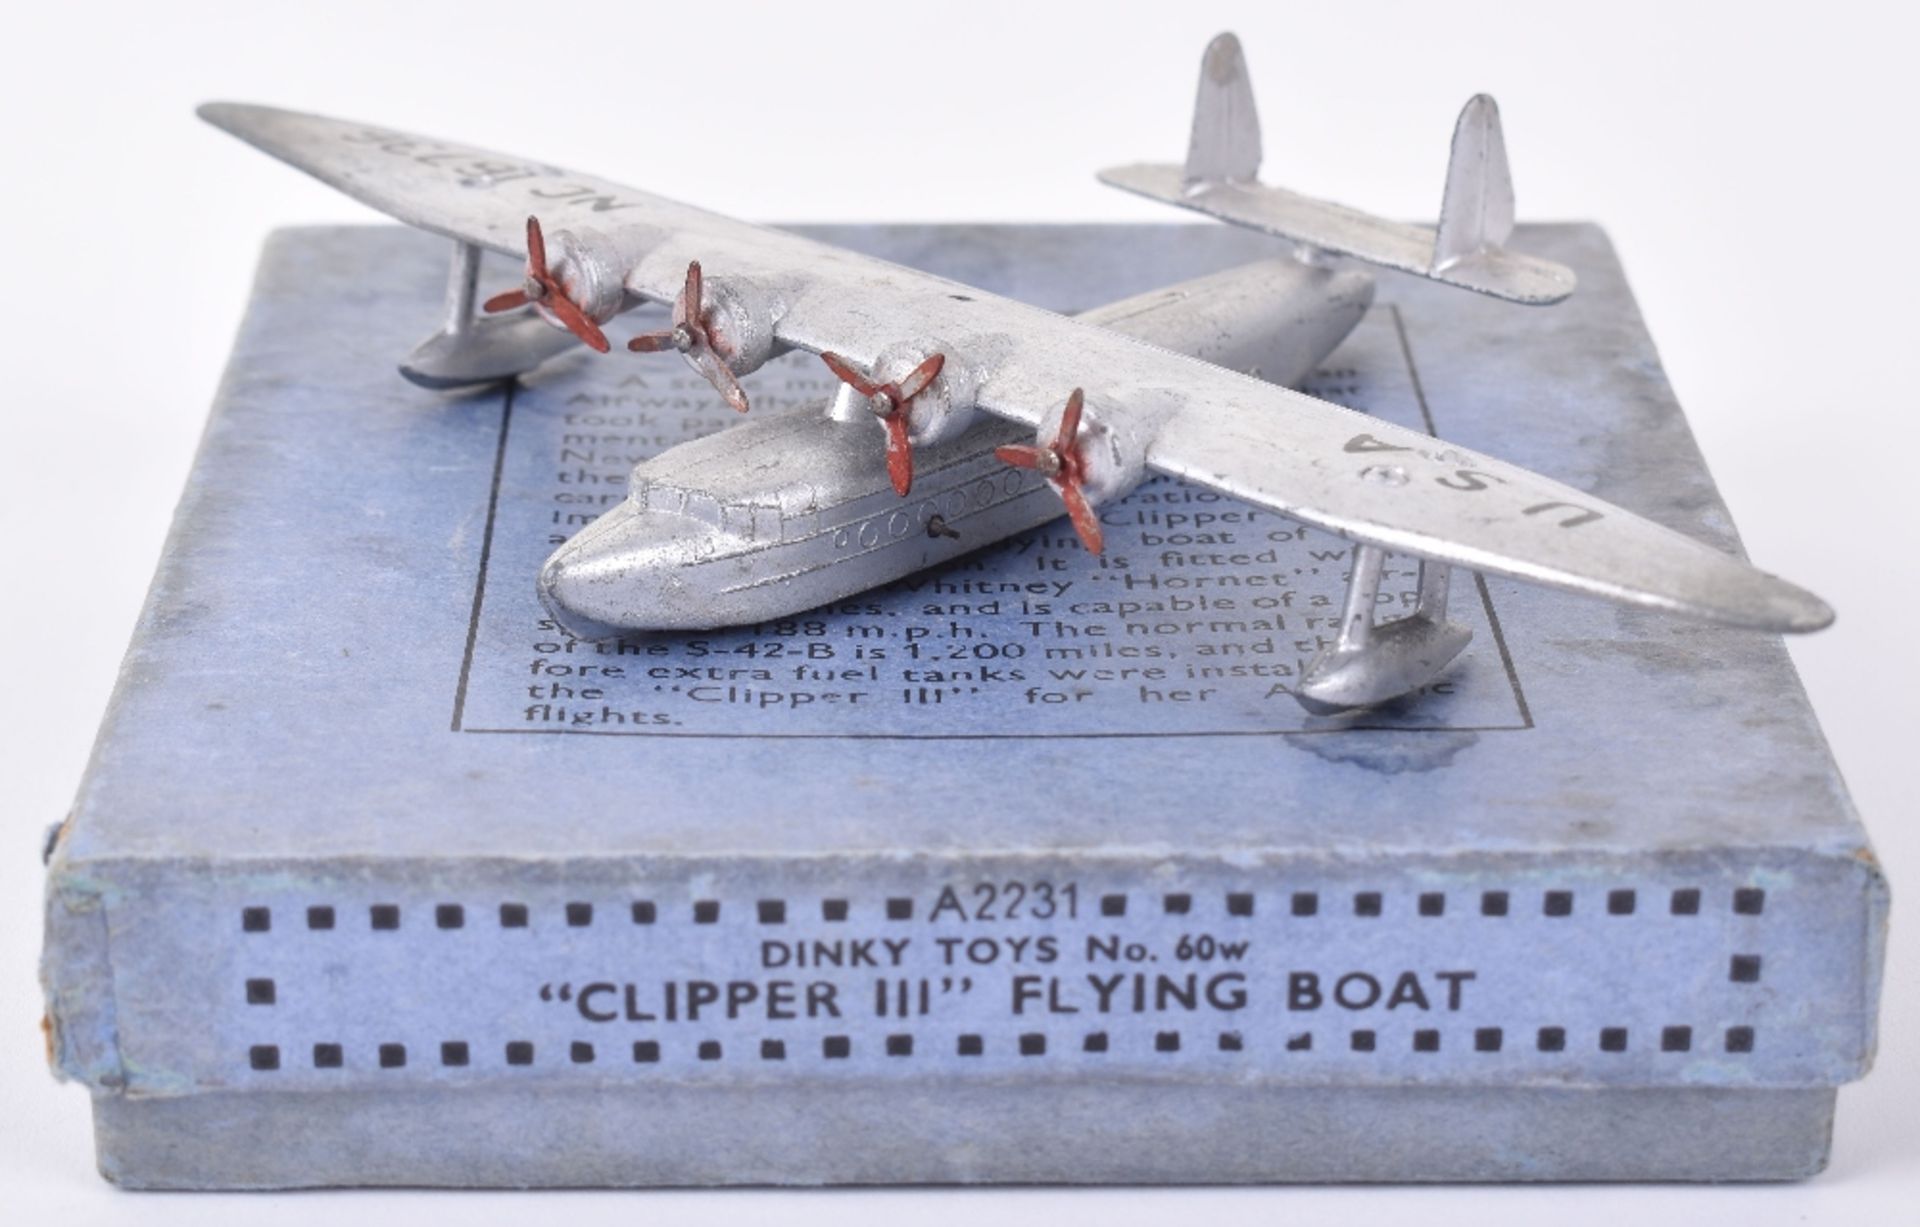 Dinky Toys 60w “Clipper III” Flying Boat